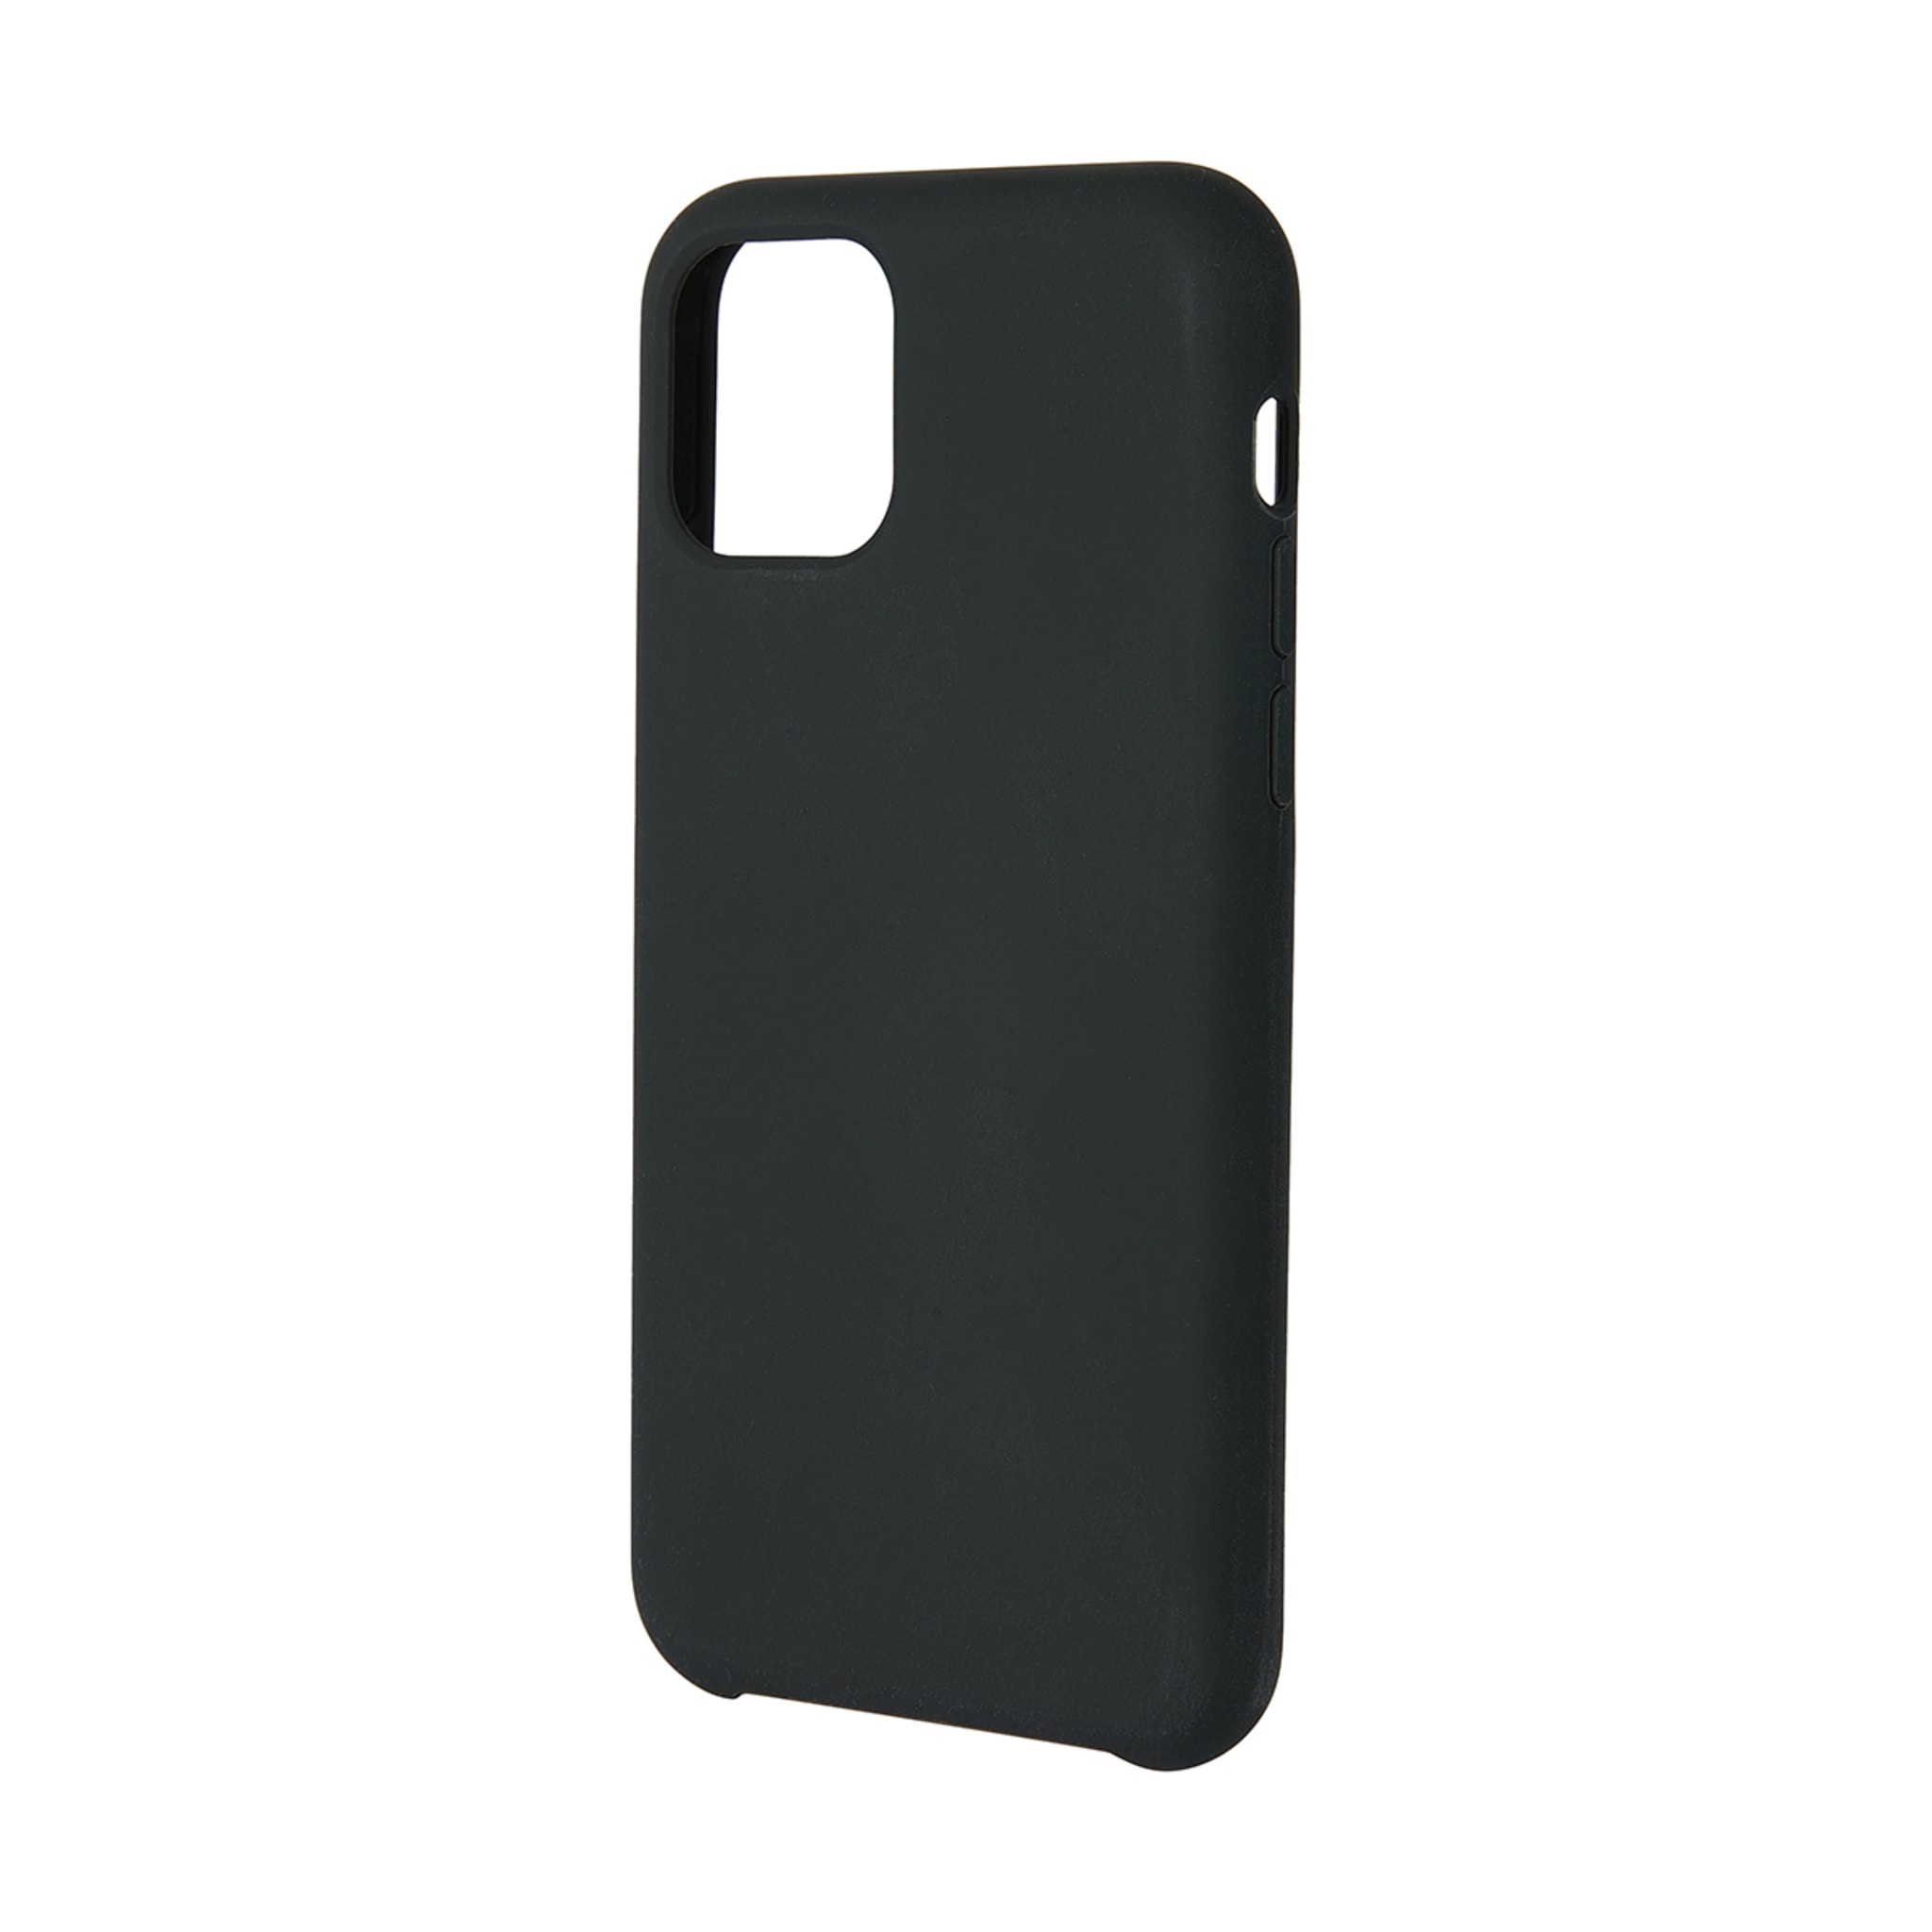 iPhone 11 Pro Silicone Case - Black - Kmart